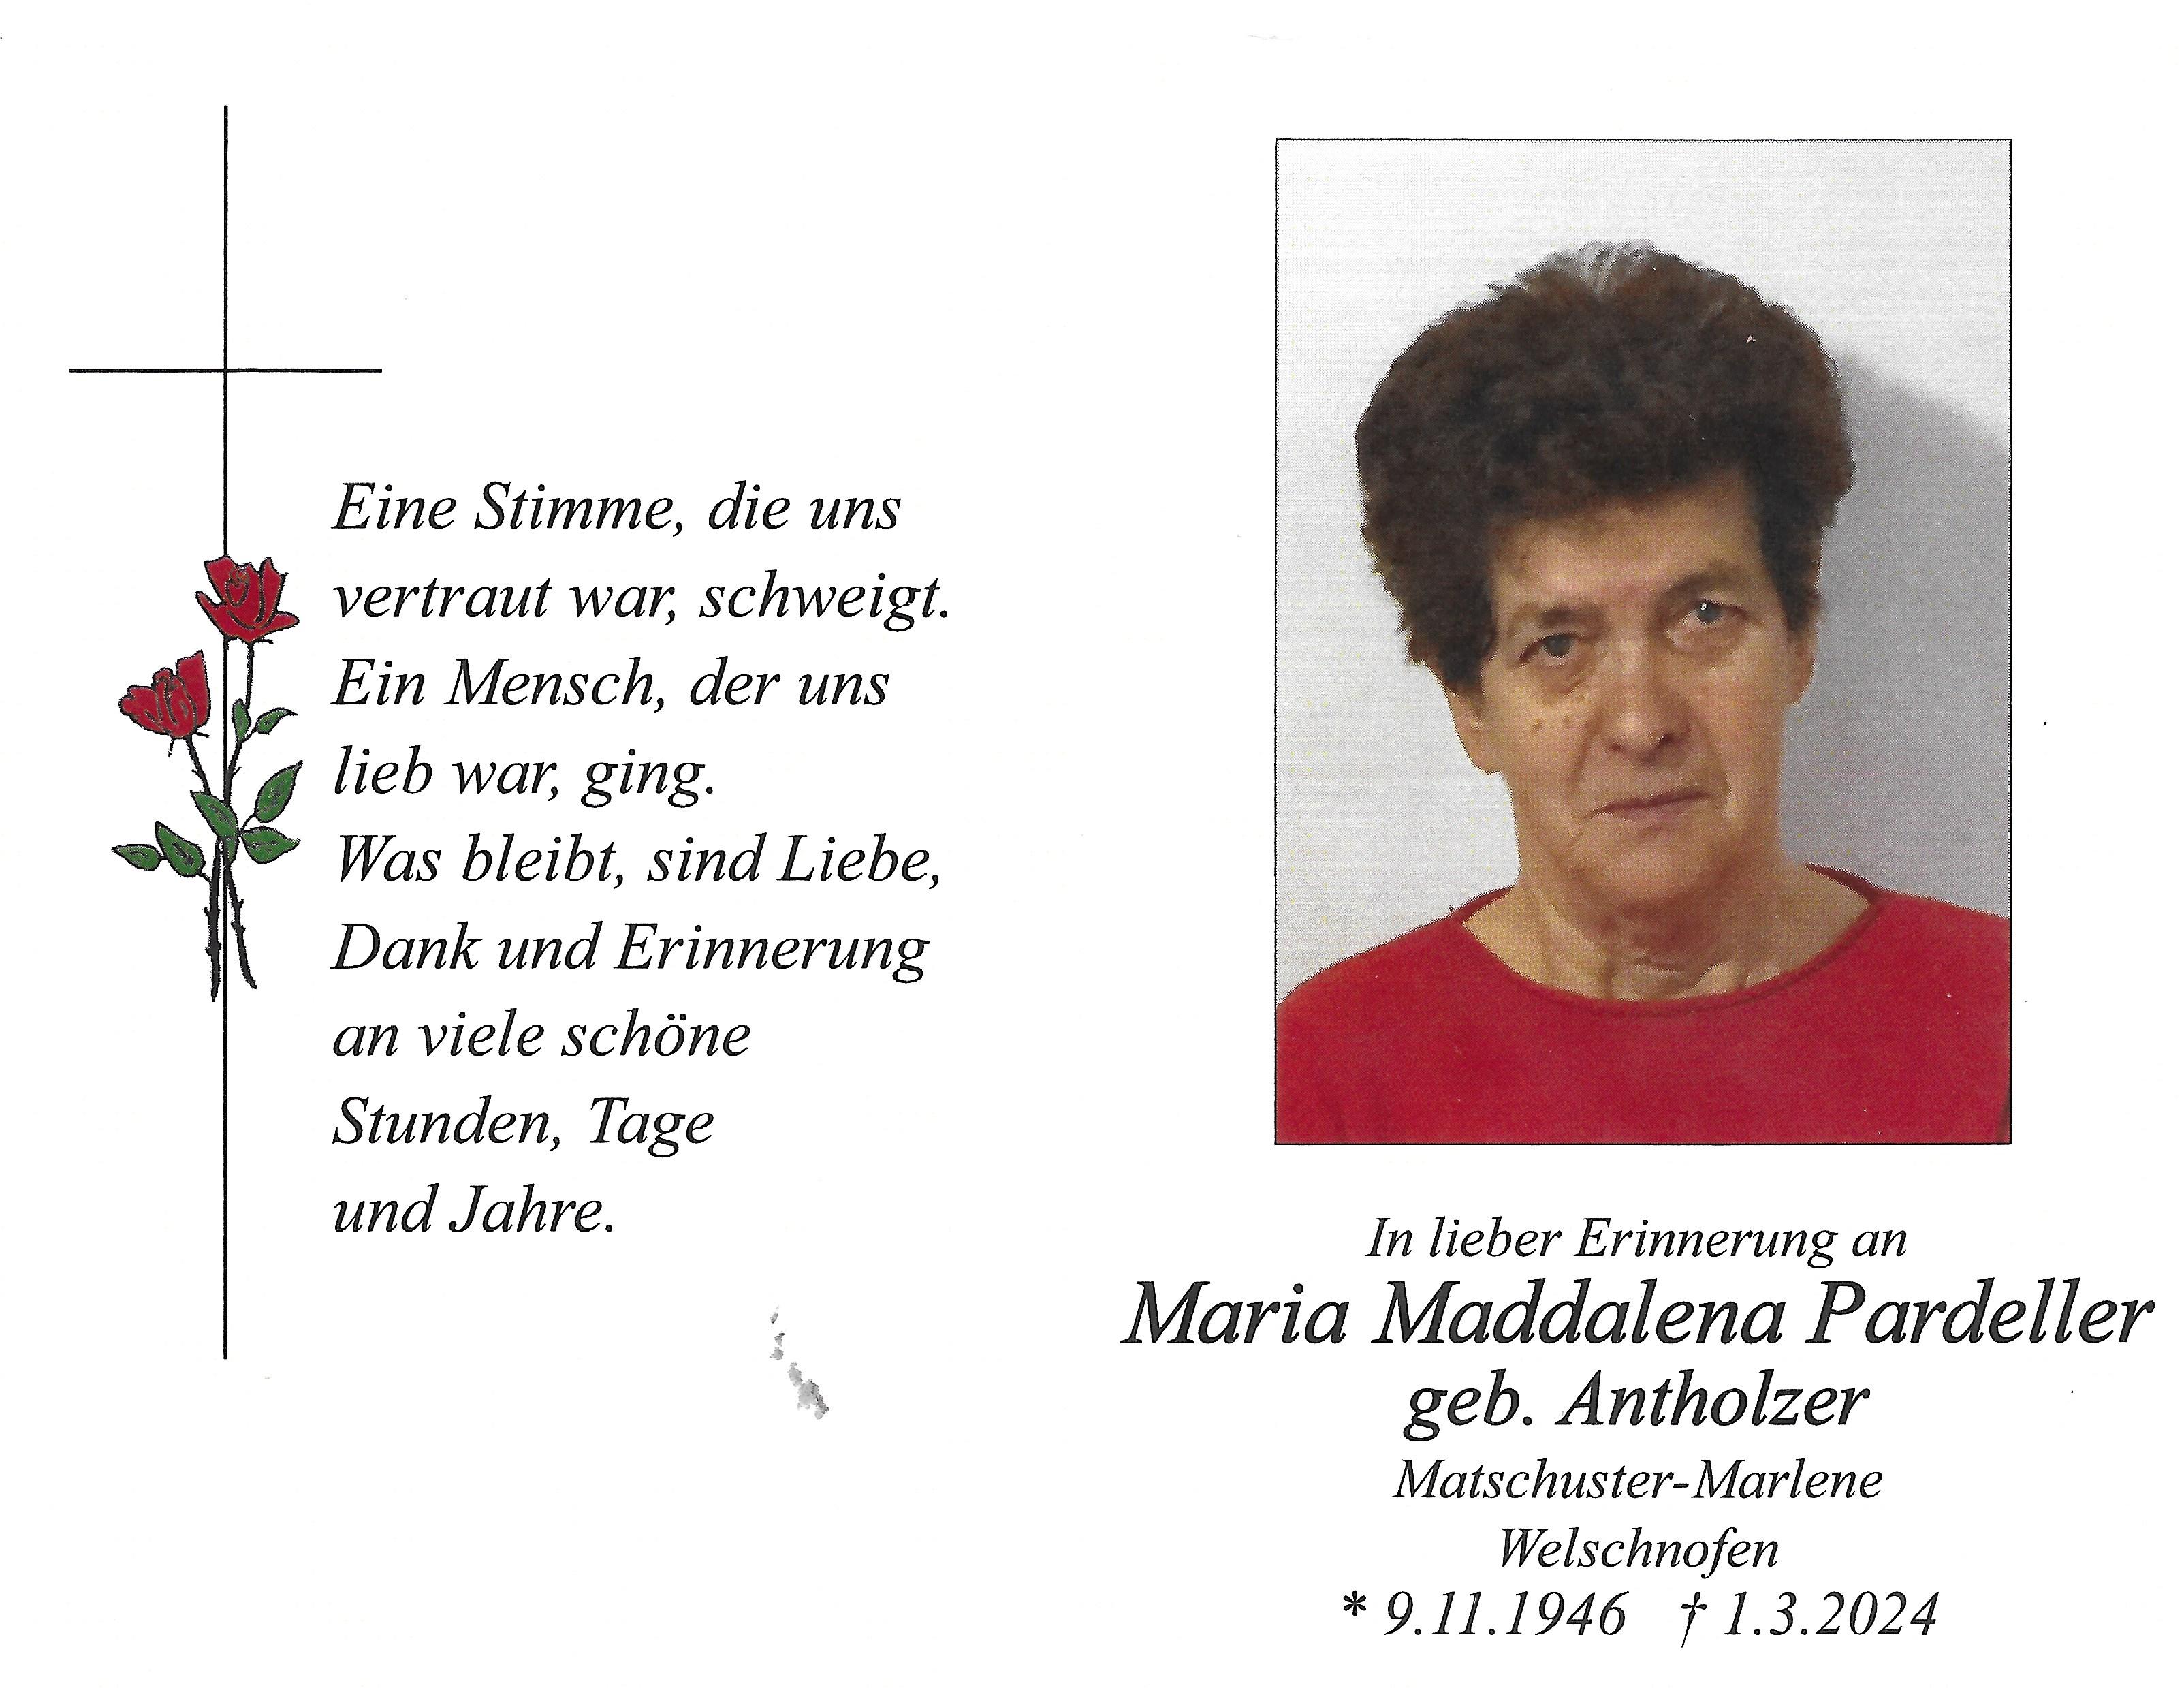 Maria Maddlena Pardeller